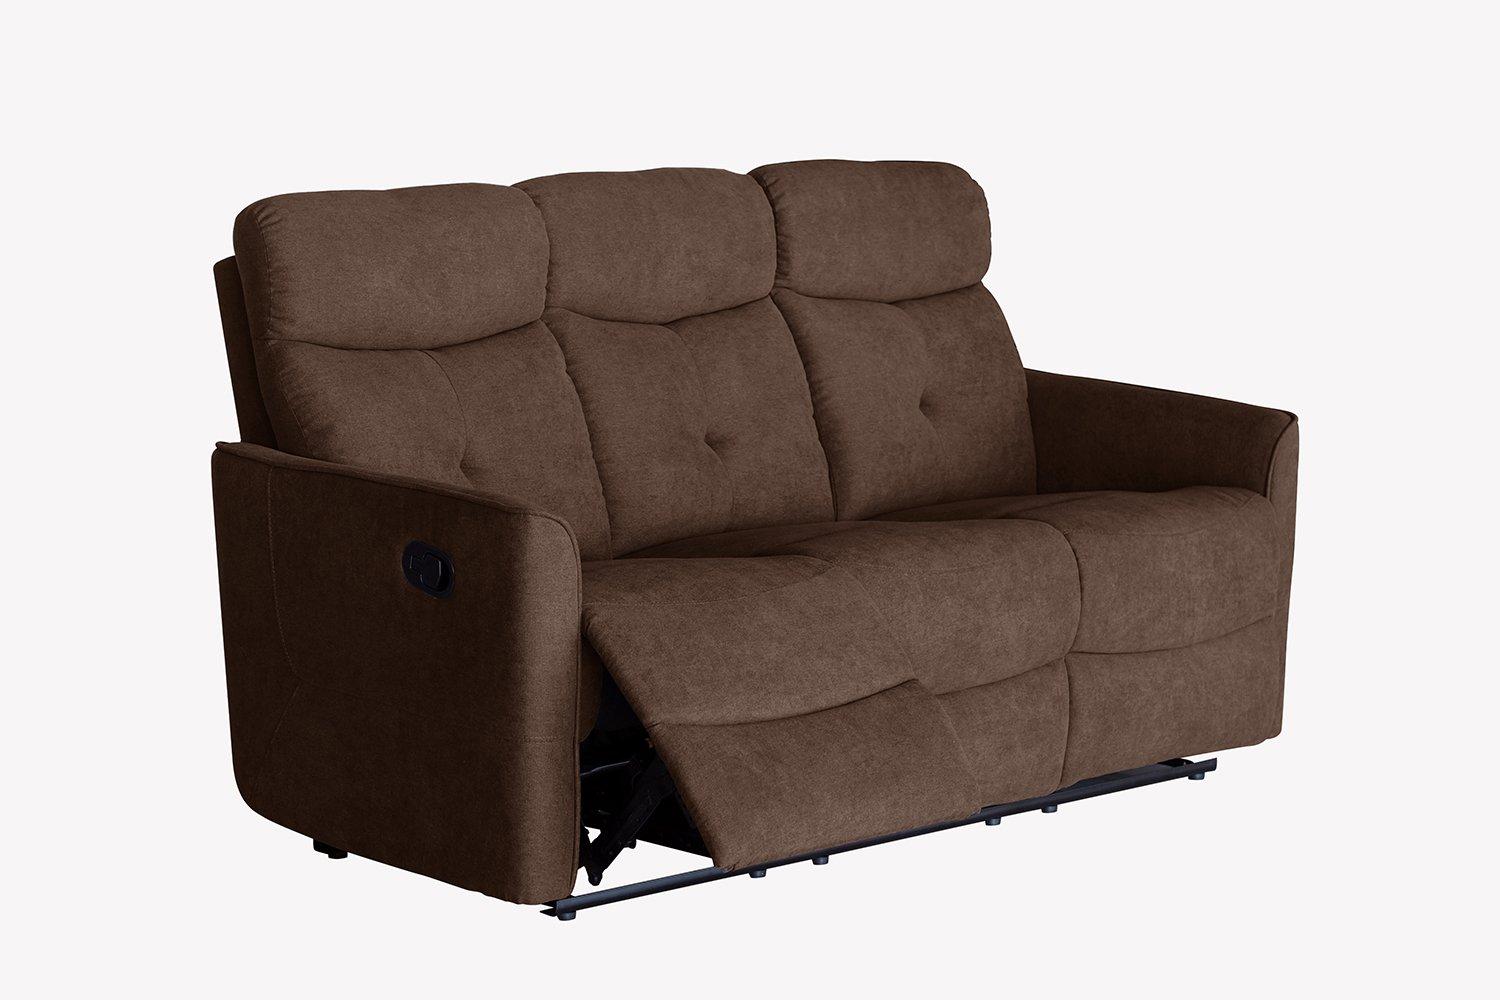 Pablo Plush 3 Seater Manual Recliner Sofa